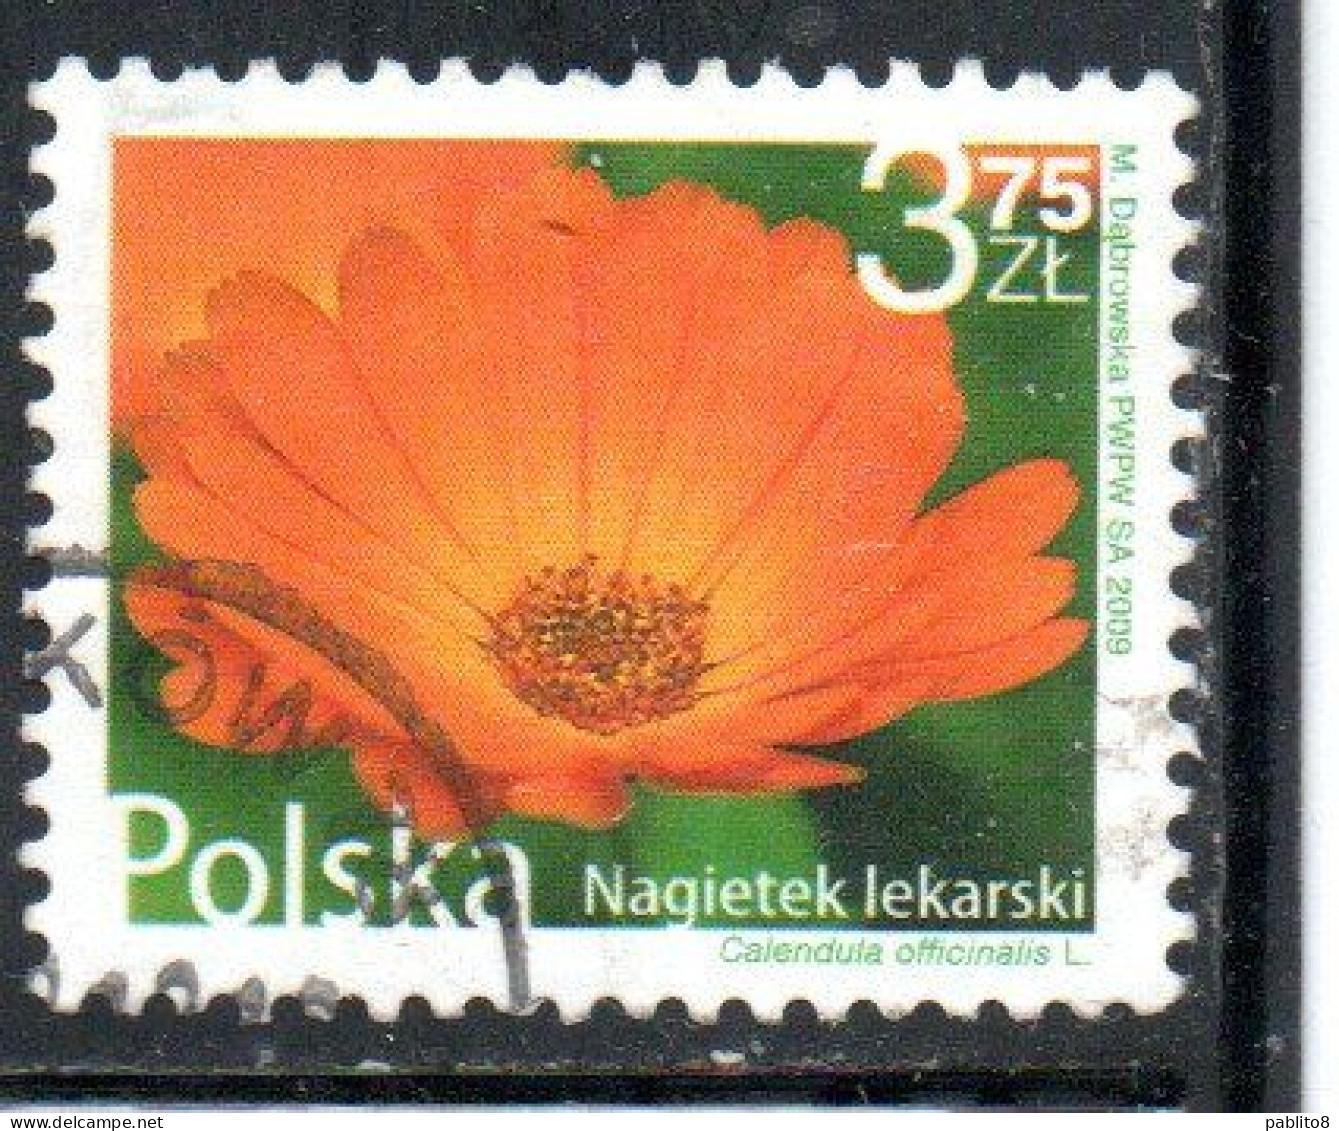 POLONIA POLAND POLSKA 2009 FRUIT AND FLOWERS CALENDULA OFFICINALIS 3.75z USED USATO OBLITERE' - Usati